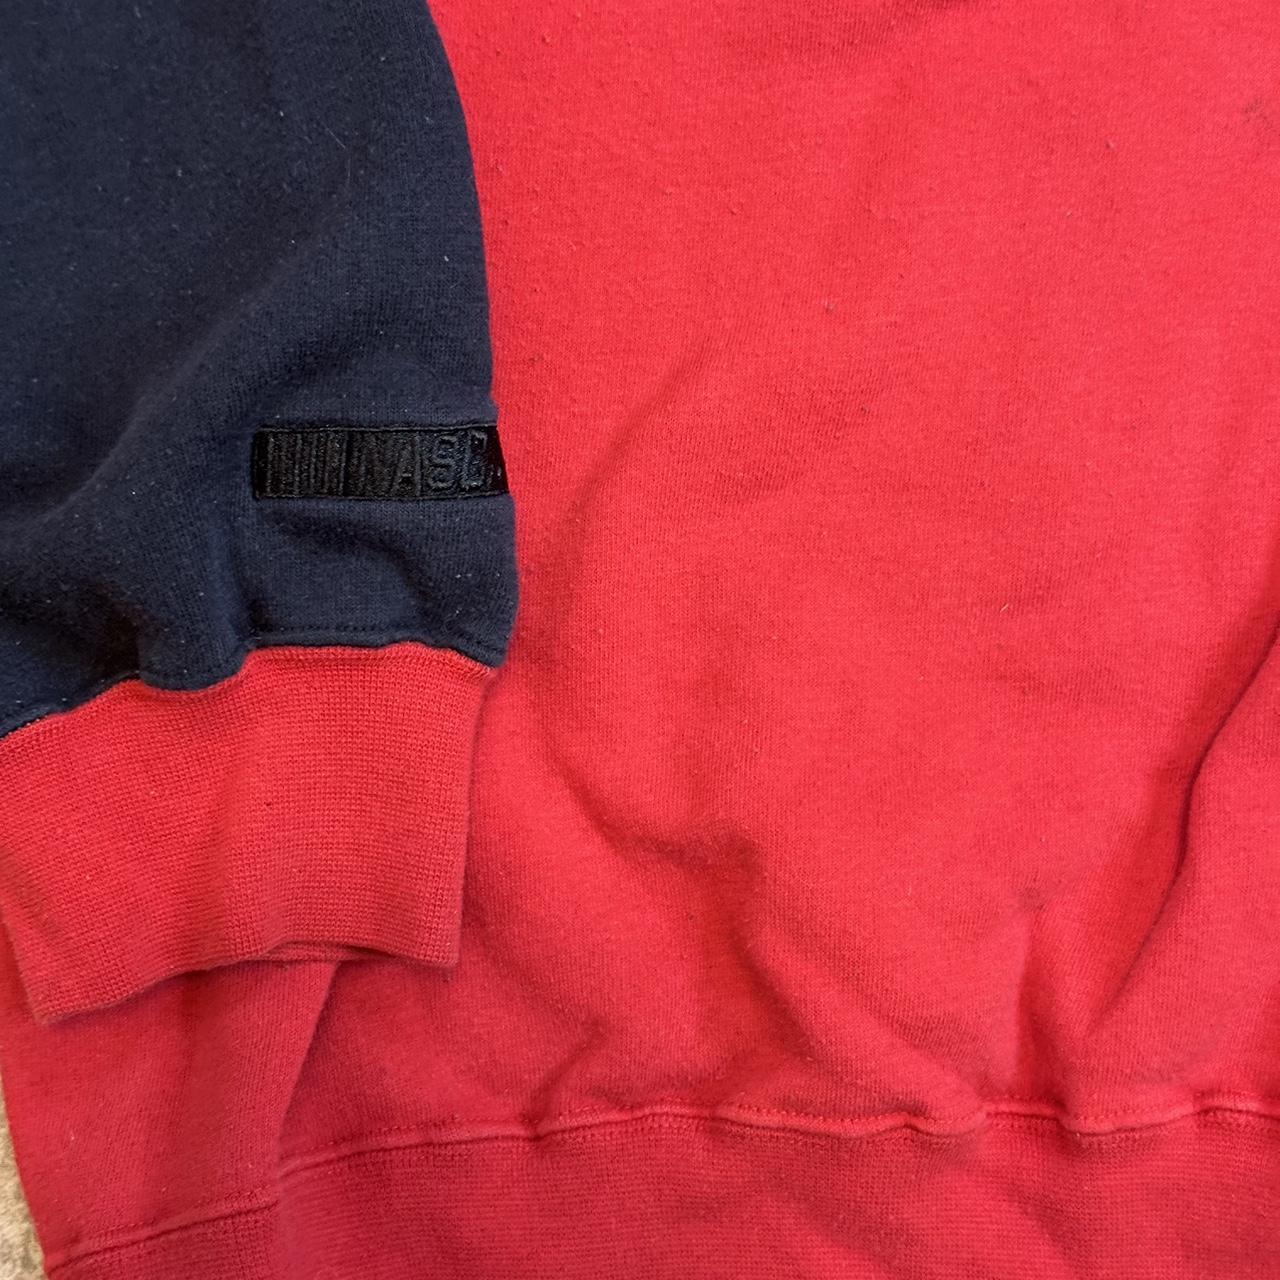 Chase Authentics Men's Red and Black Sweatshirt (4)